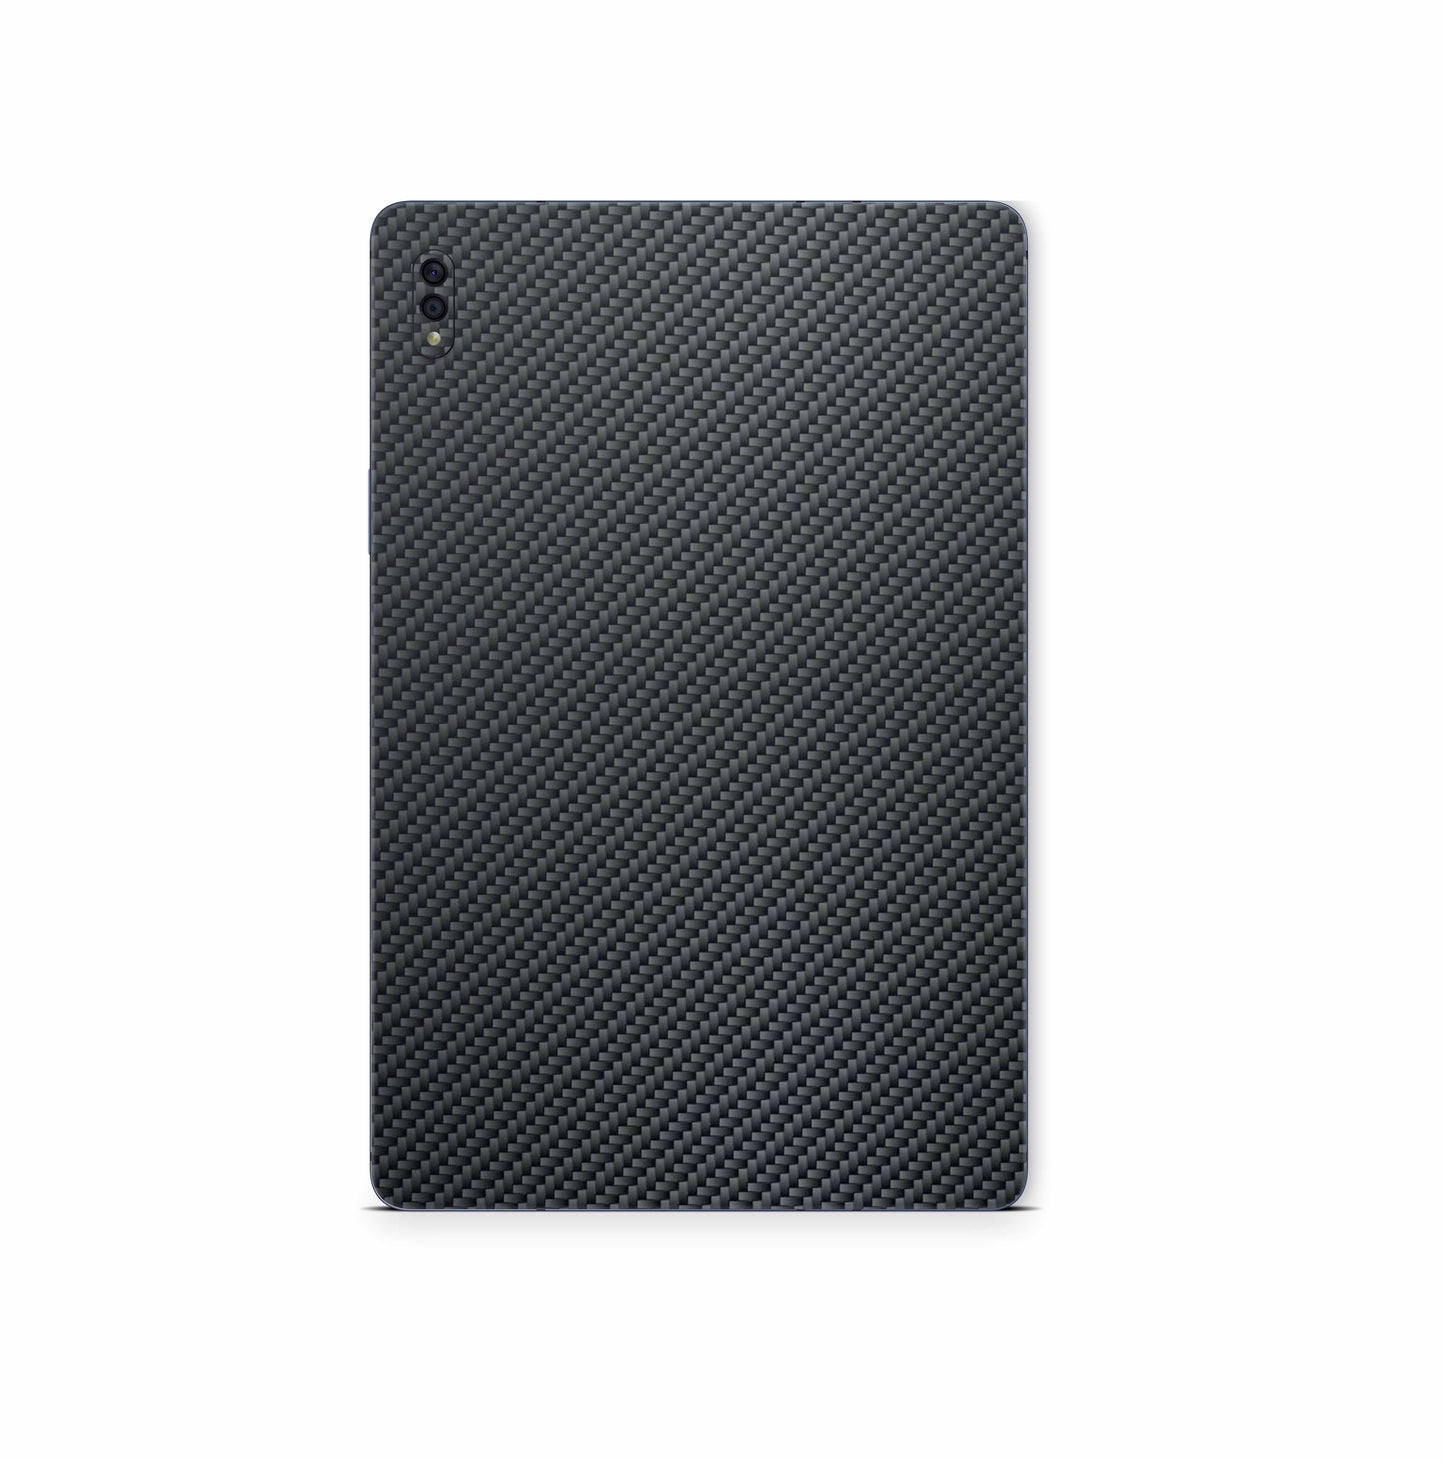 Samsung Galaxy Tab S7 Skins S7 Plus S7 FE : Design Schutzfolie Premium Vinyl Carbon Aufkleber skins4u   